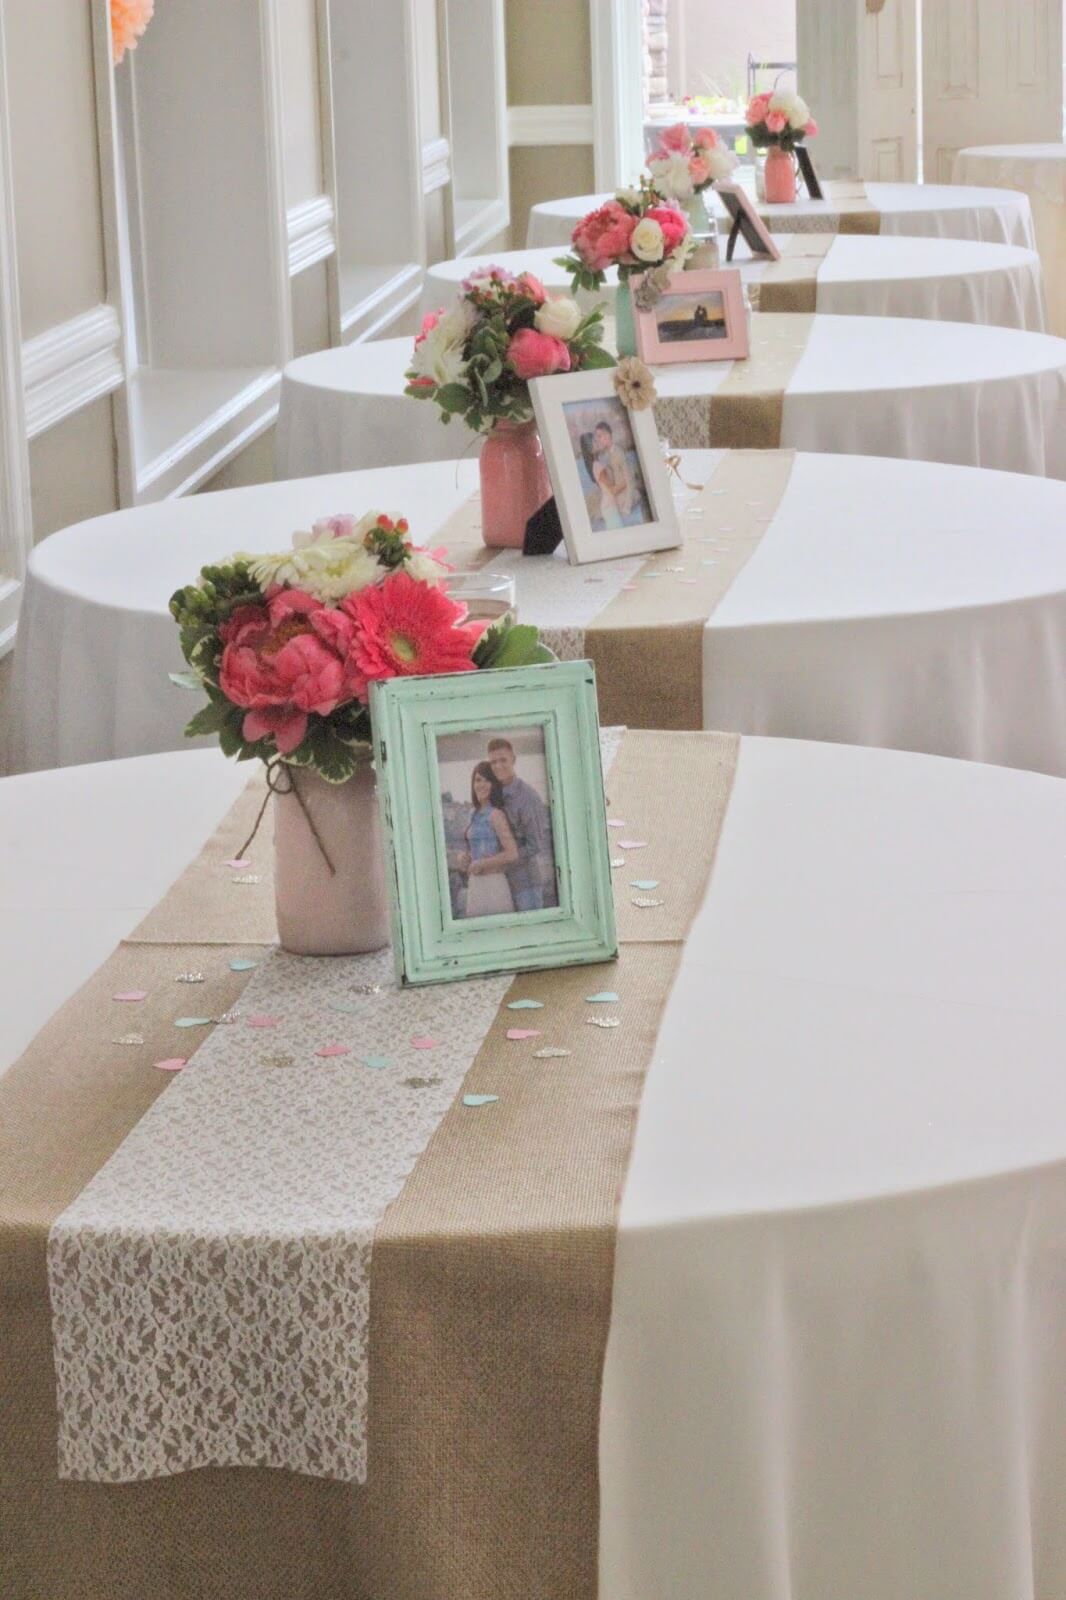 15 Budget-Friendly DIY Wedding Centerpiece Ideas for a Gorgeous Reception